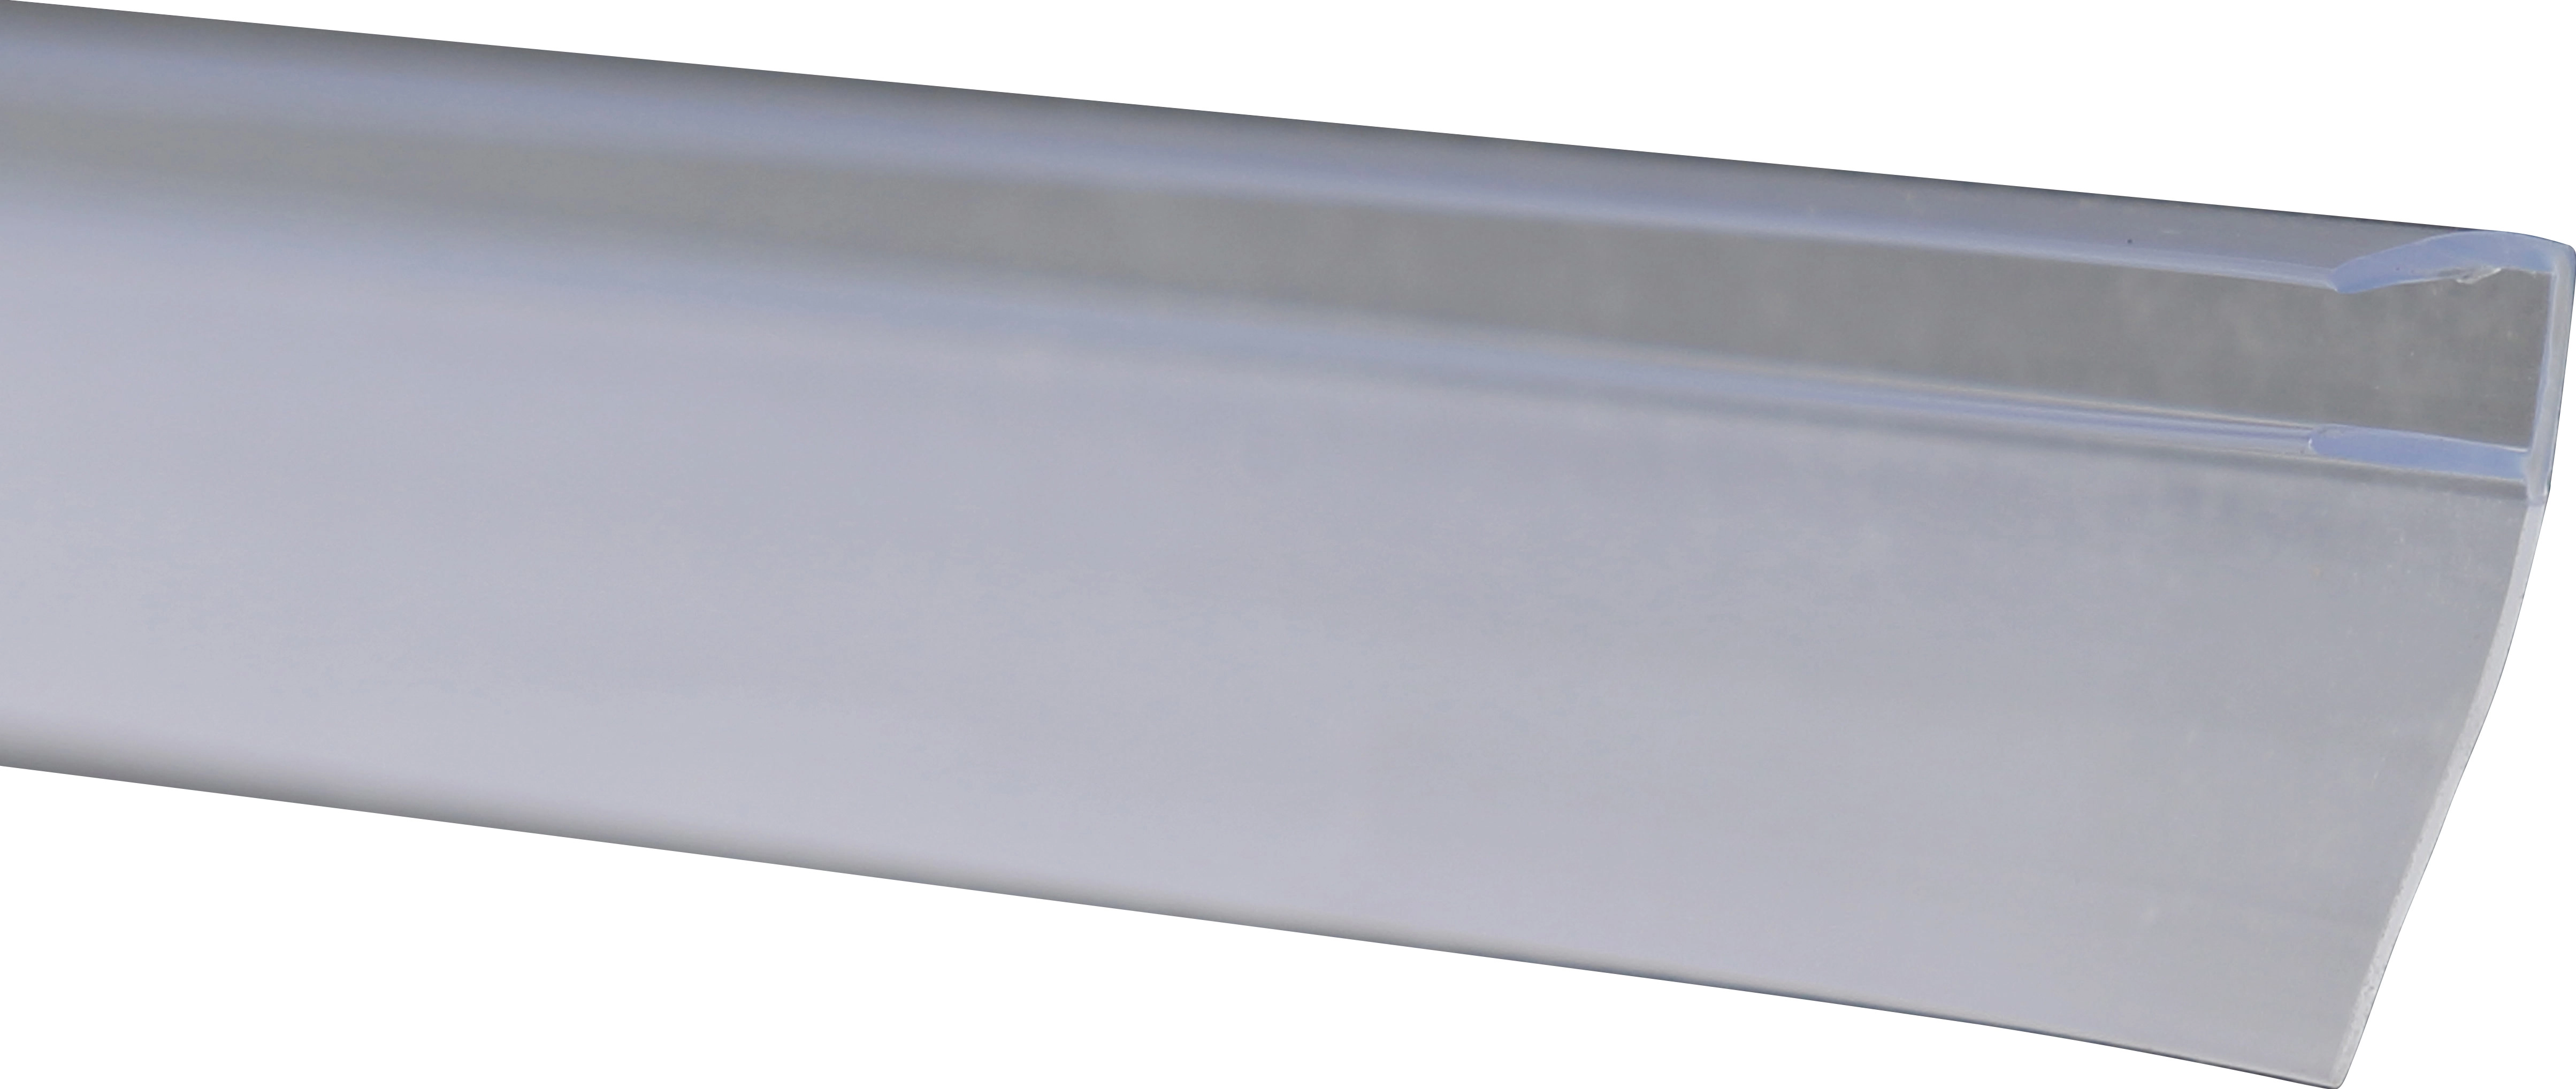 Vertikale Türabschlussdichtung 2er-Set 5 mm Glasstärke kaufen bei OBI